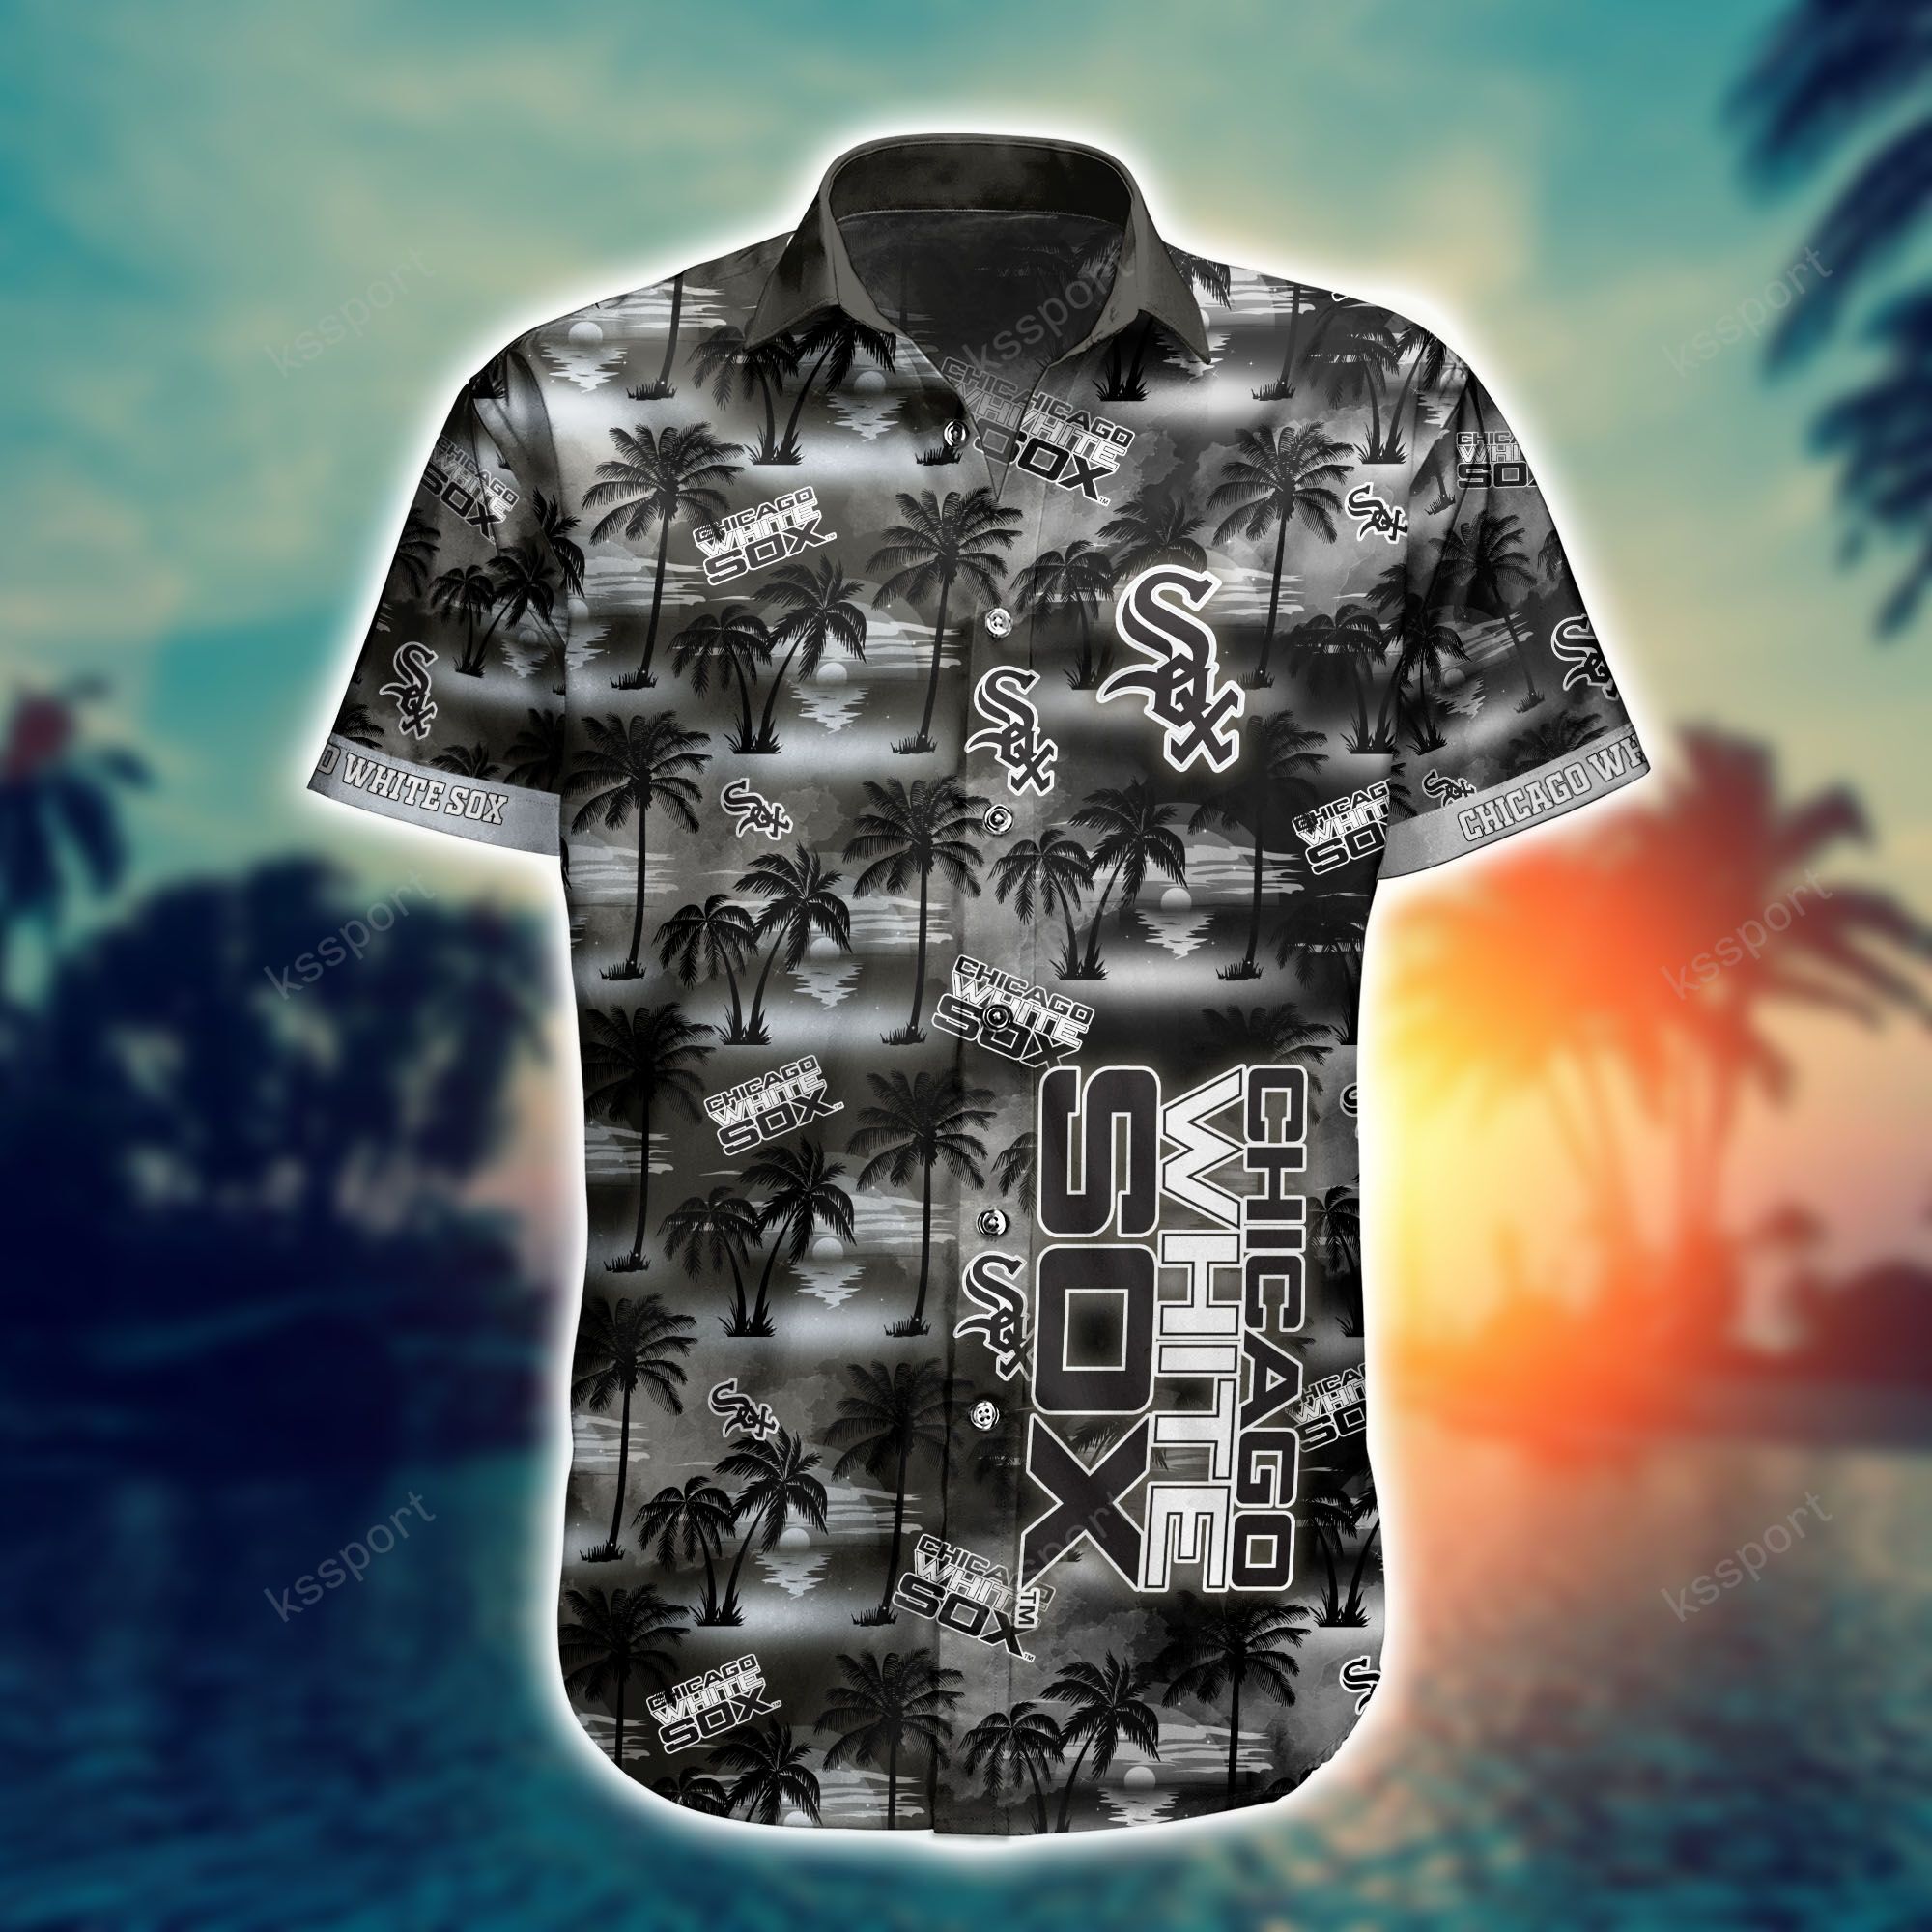 Hawaiian shirt and shorts is a great way to look stylish at a beach party 139